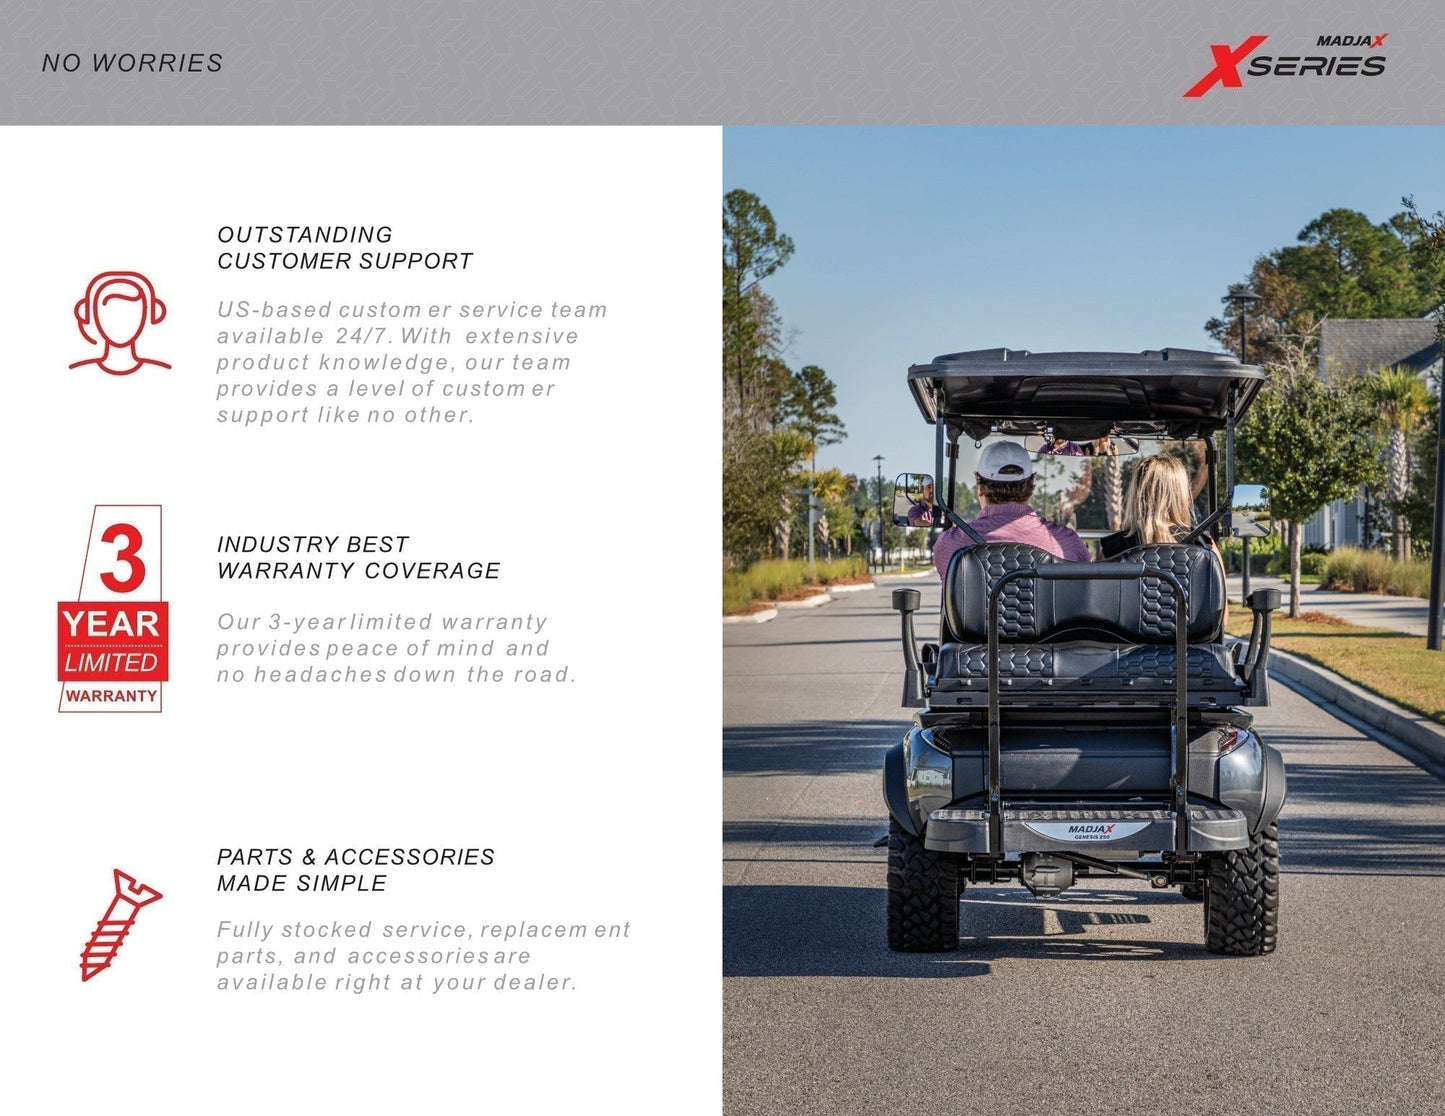 MADJAX X Series Storm 4 Passenger Golf Cart - Sea Foam #1101 *SOLD*